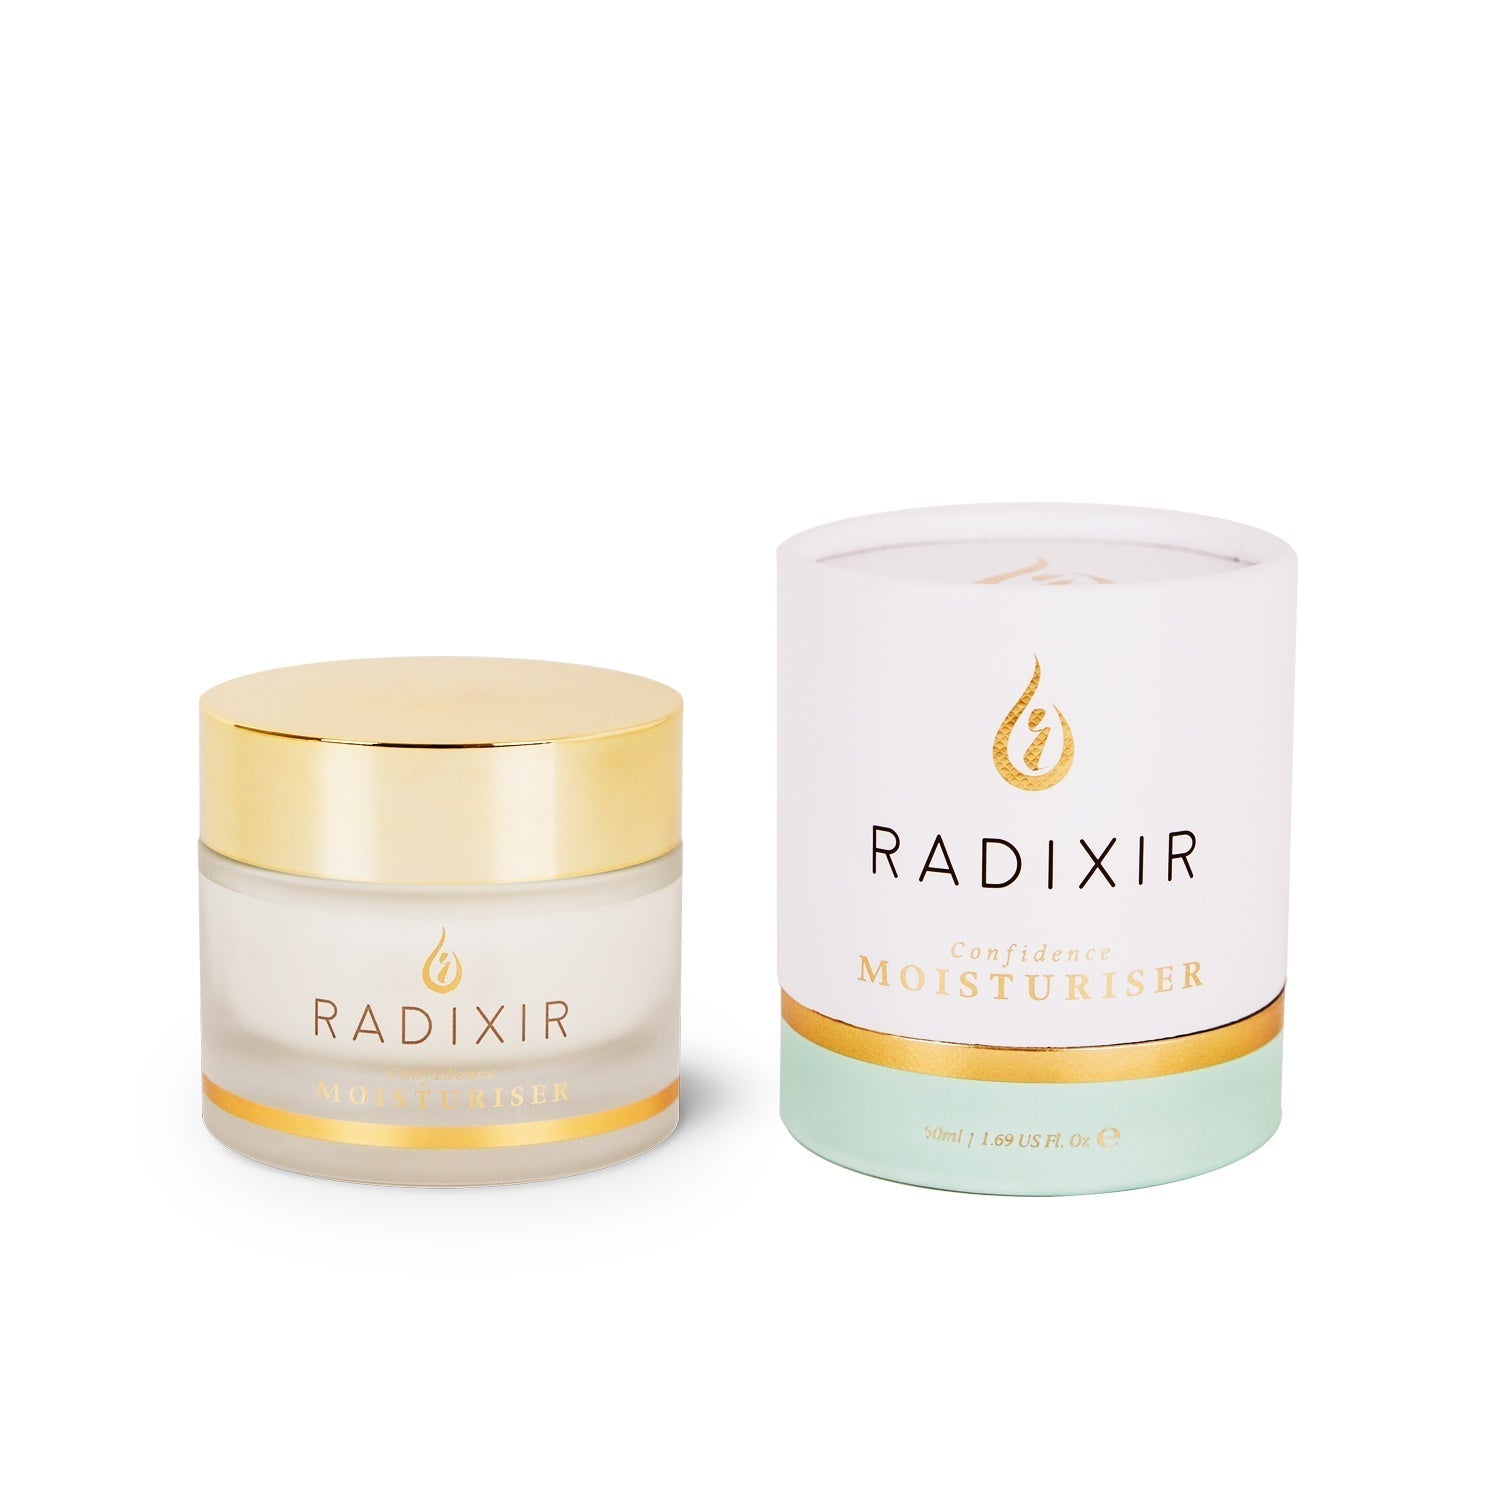 Radixir confidence moisturizer jar tube 